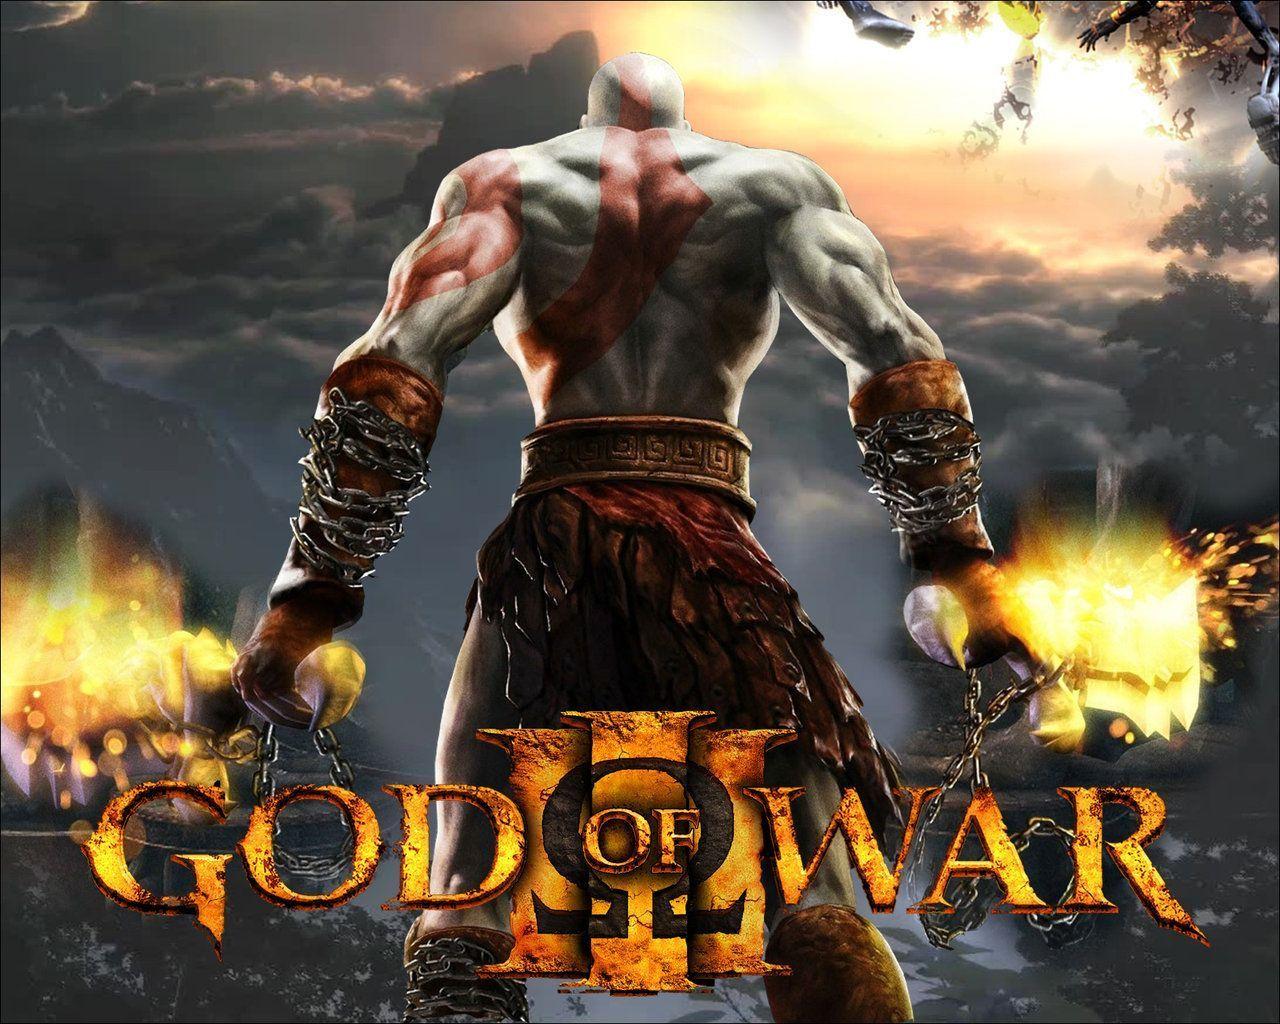 Wallpaper For > God Of War 3 Wallpaper Free Download